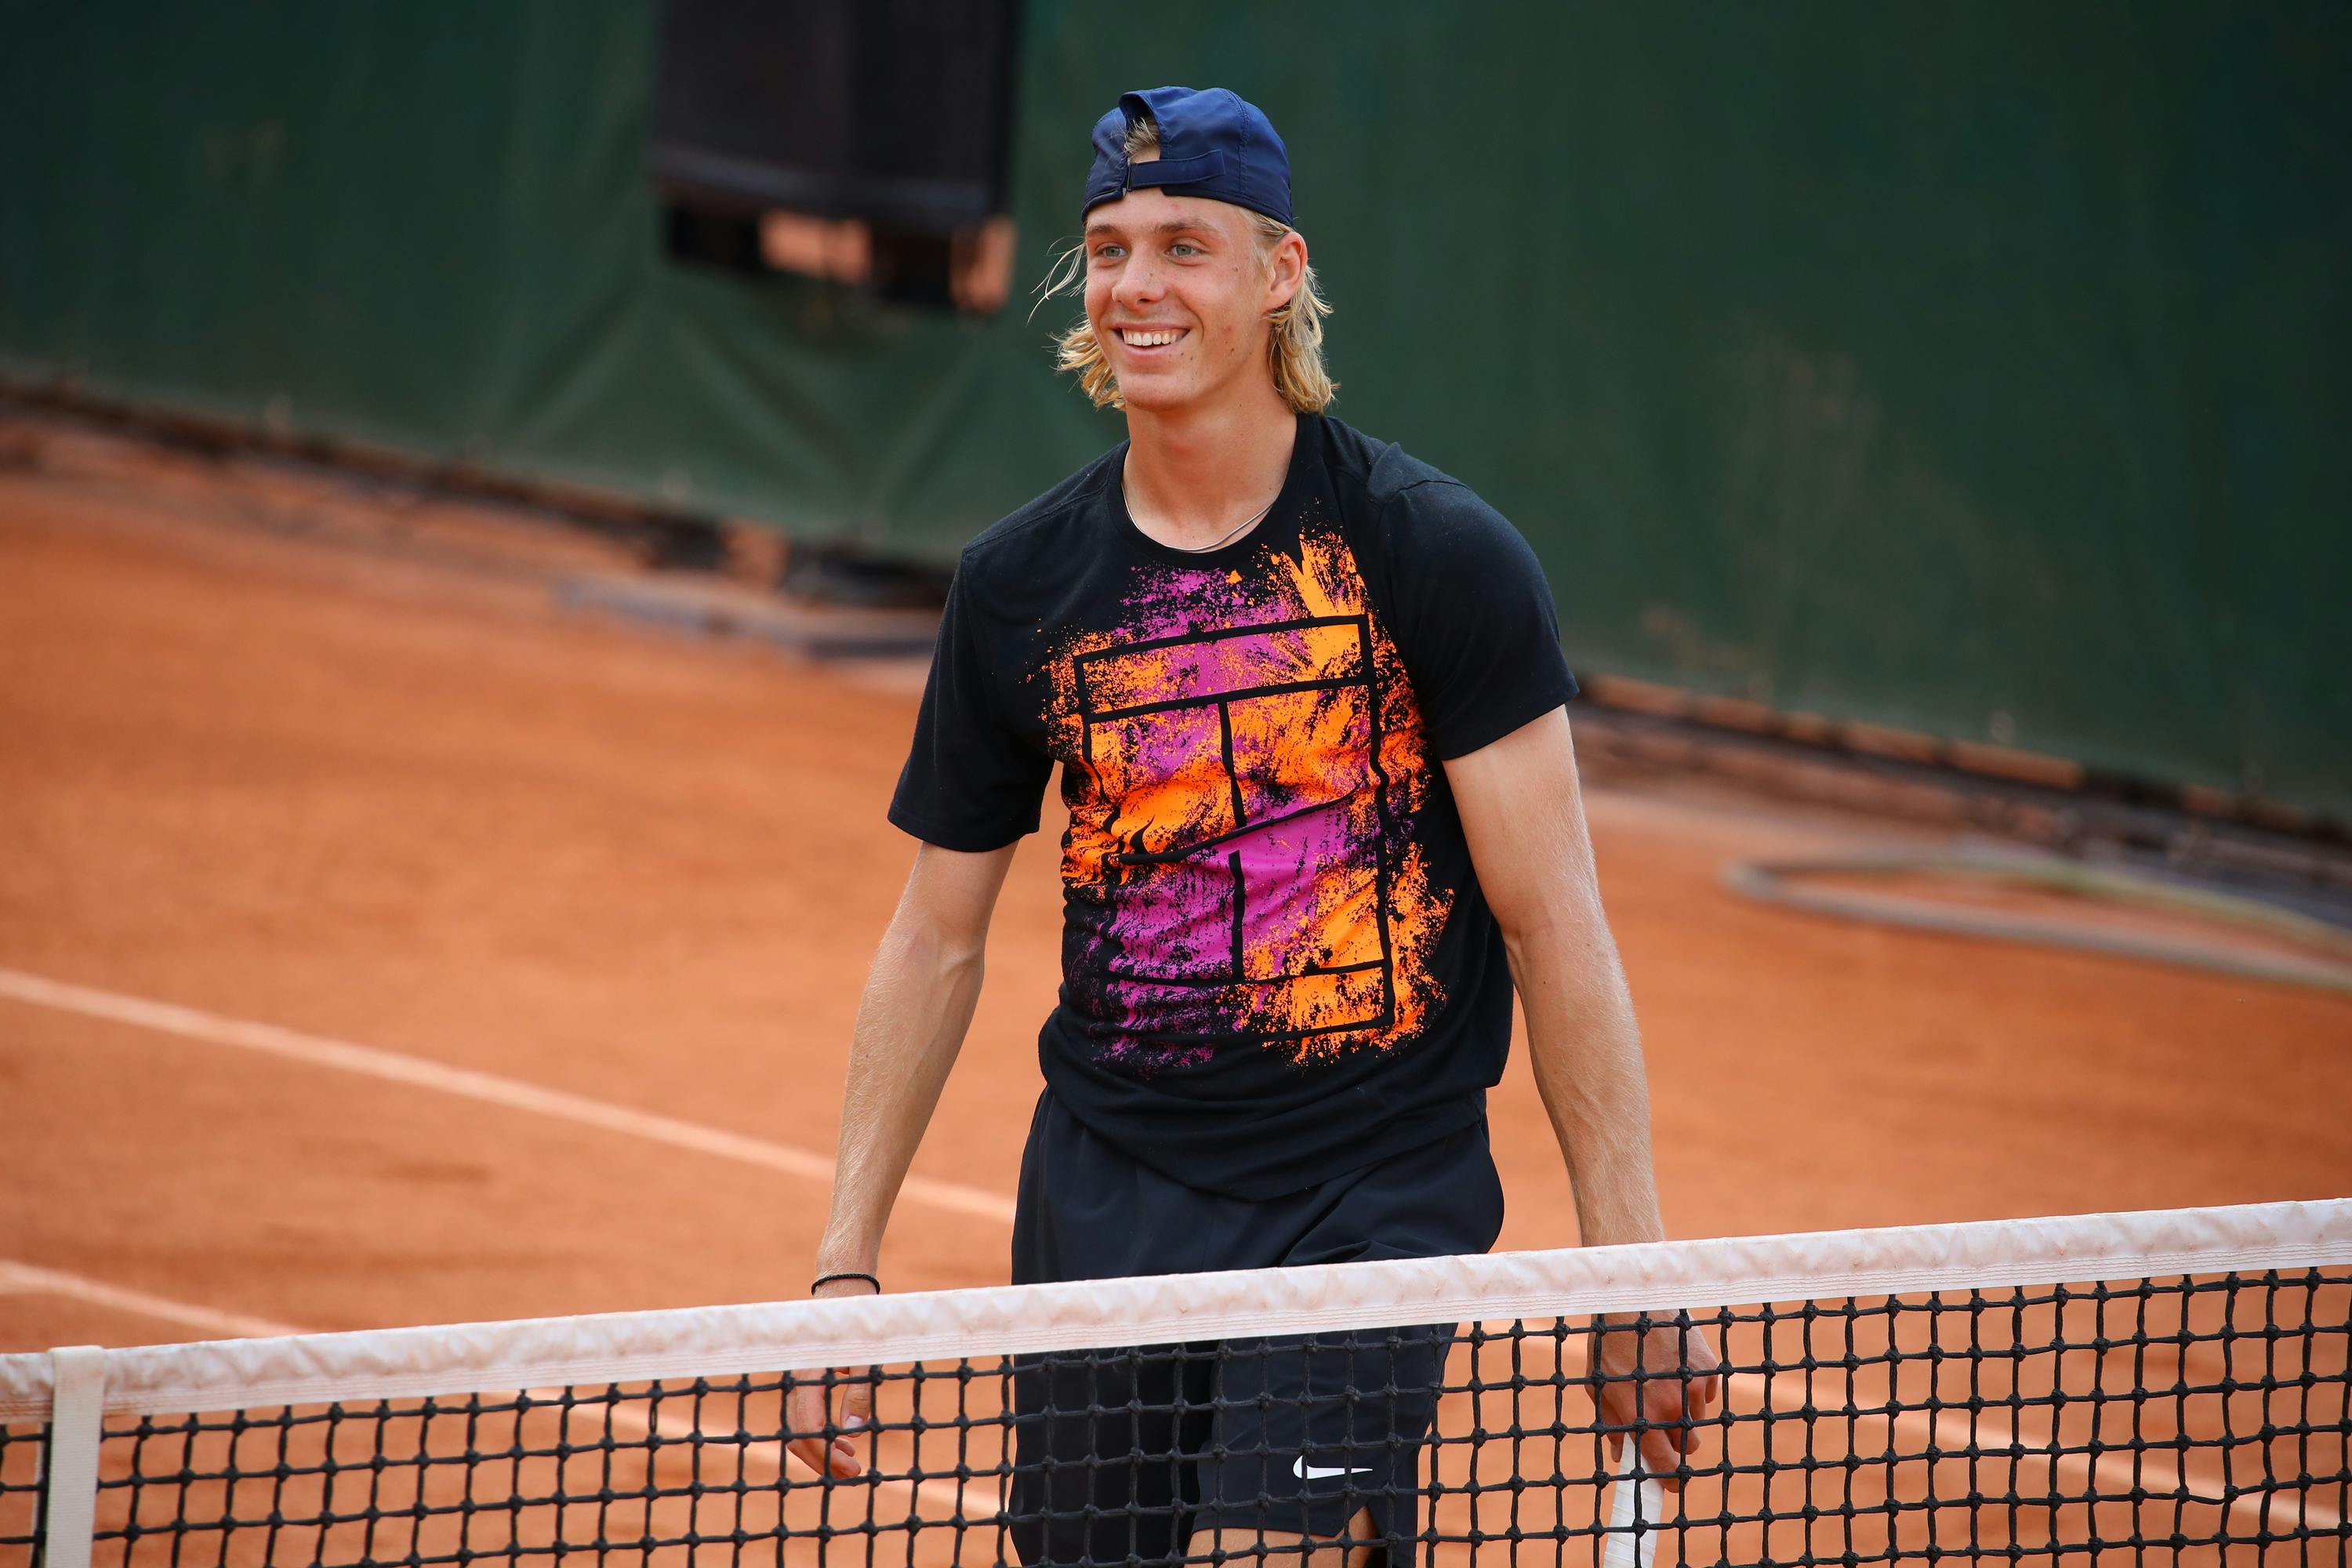 Denis Shapovalov smiling at practice during Roland-Garros 2018